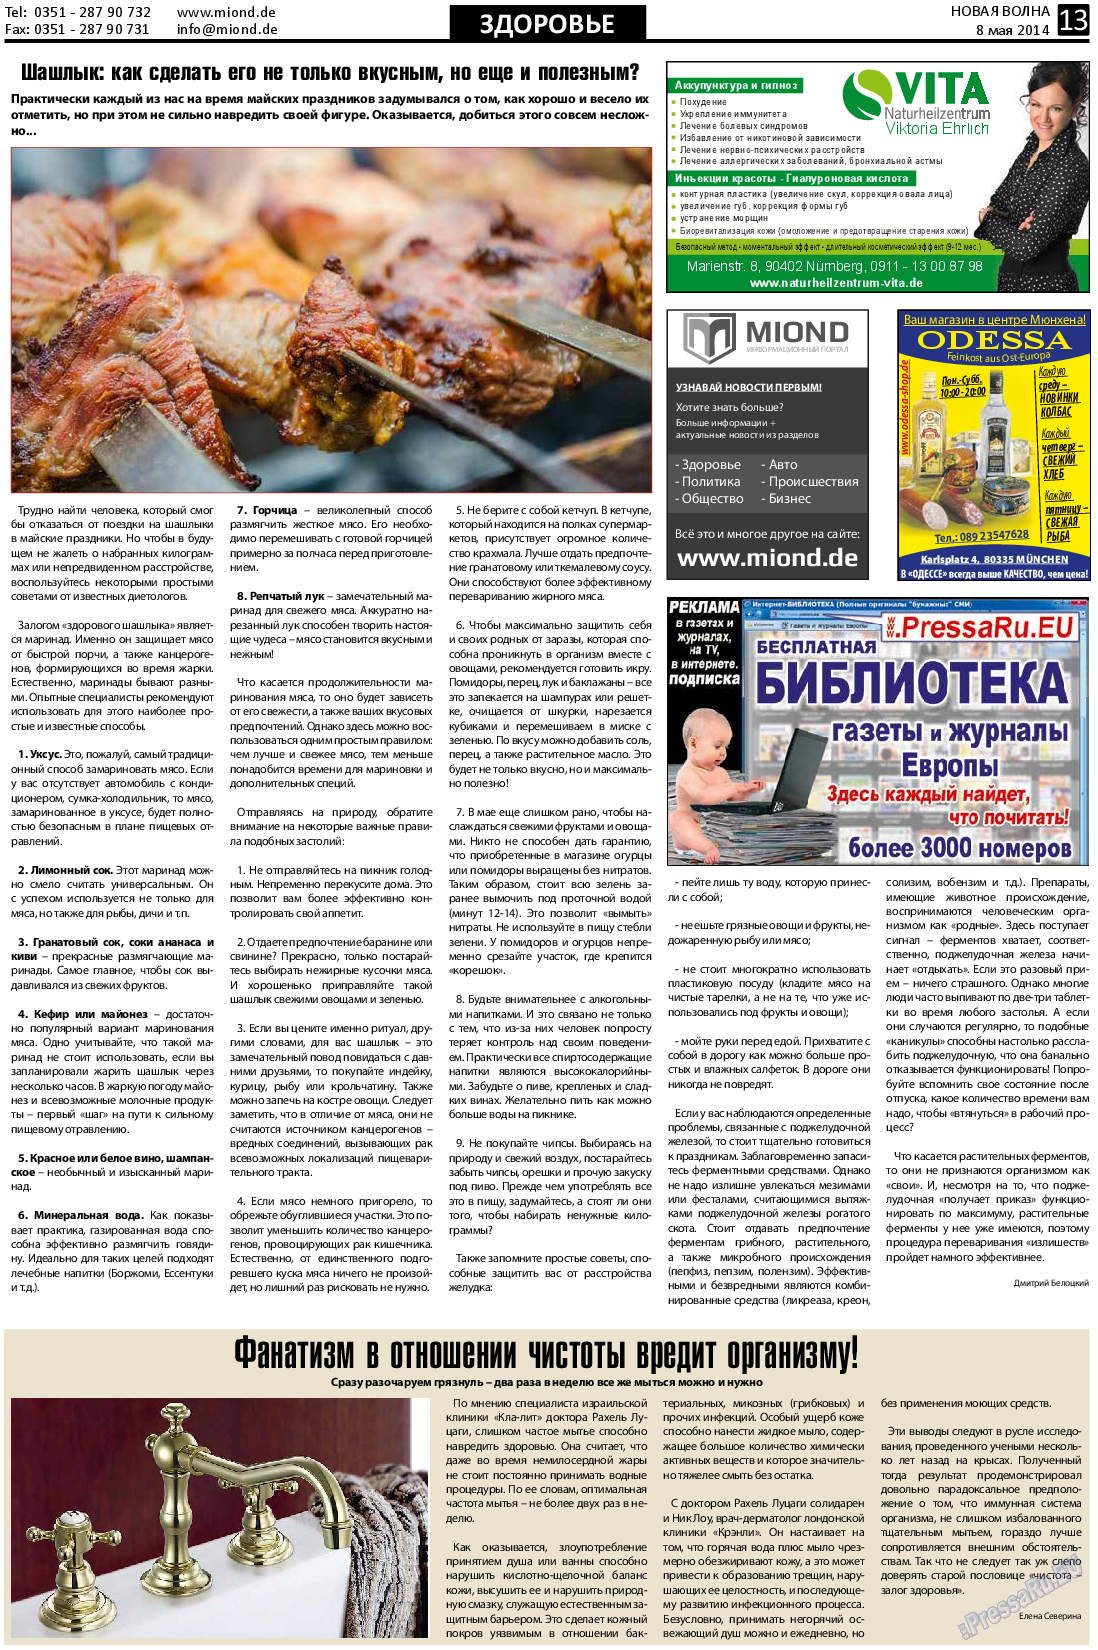 Новая Wолна, газета. 2014 №19 стр.13